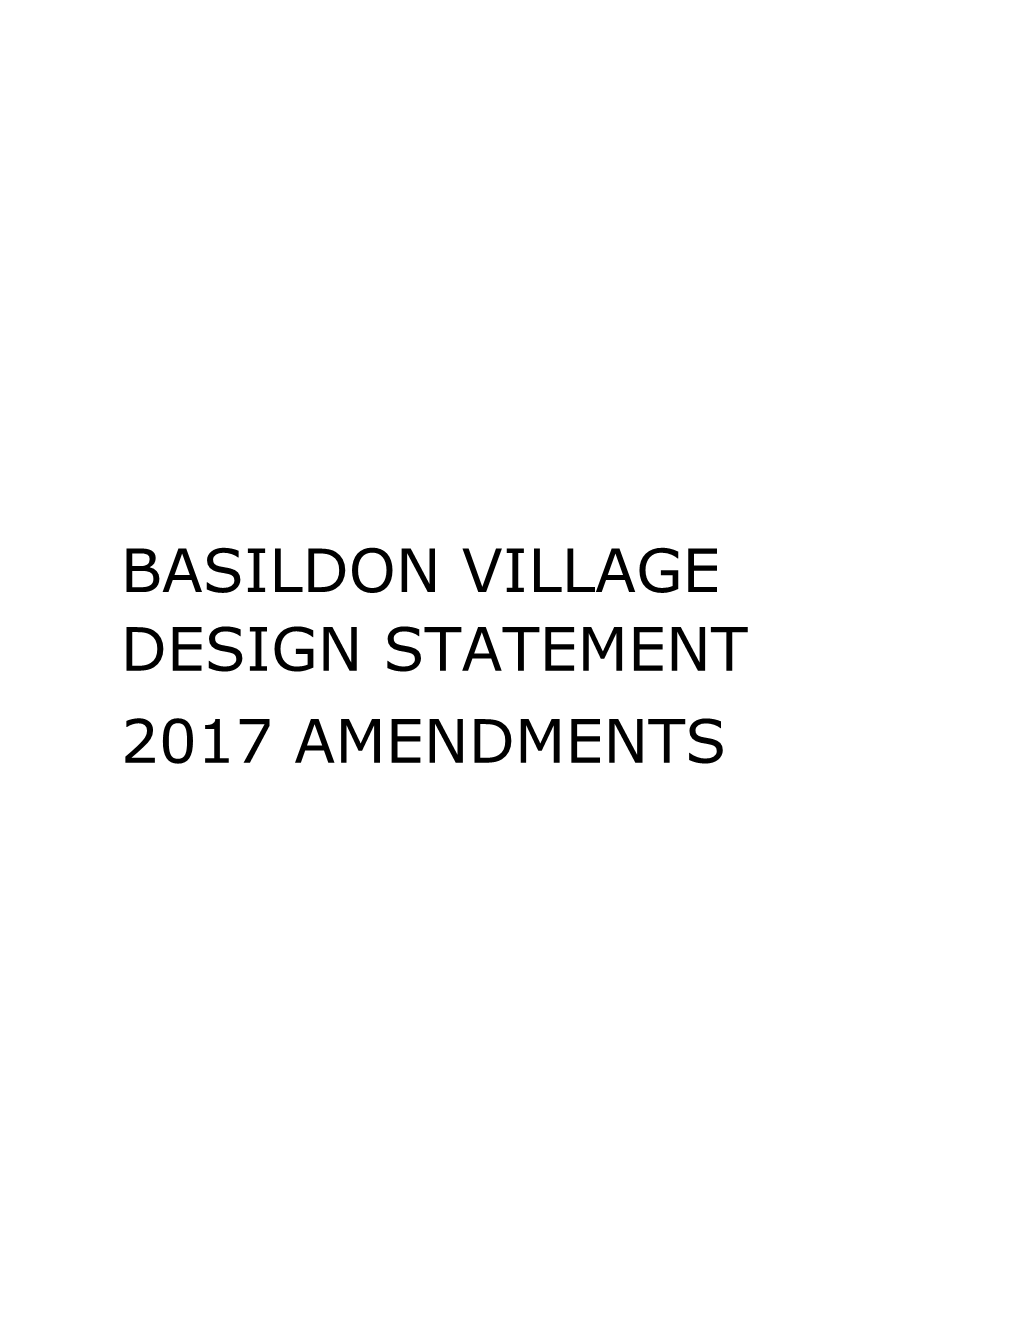 Basildon Village Design Statement 2017 Amendments